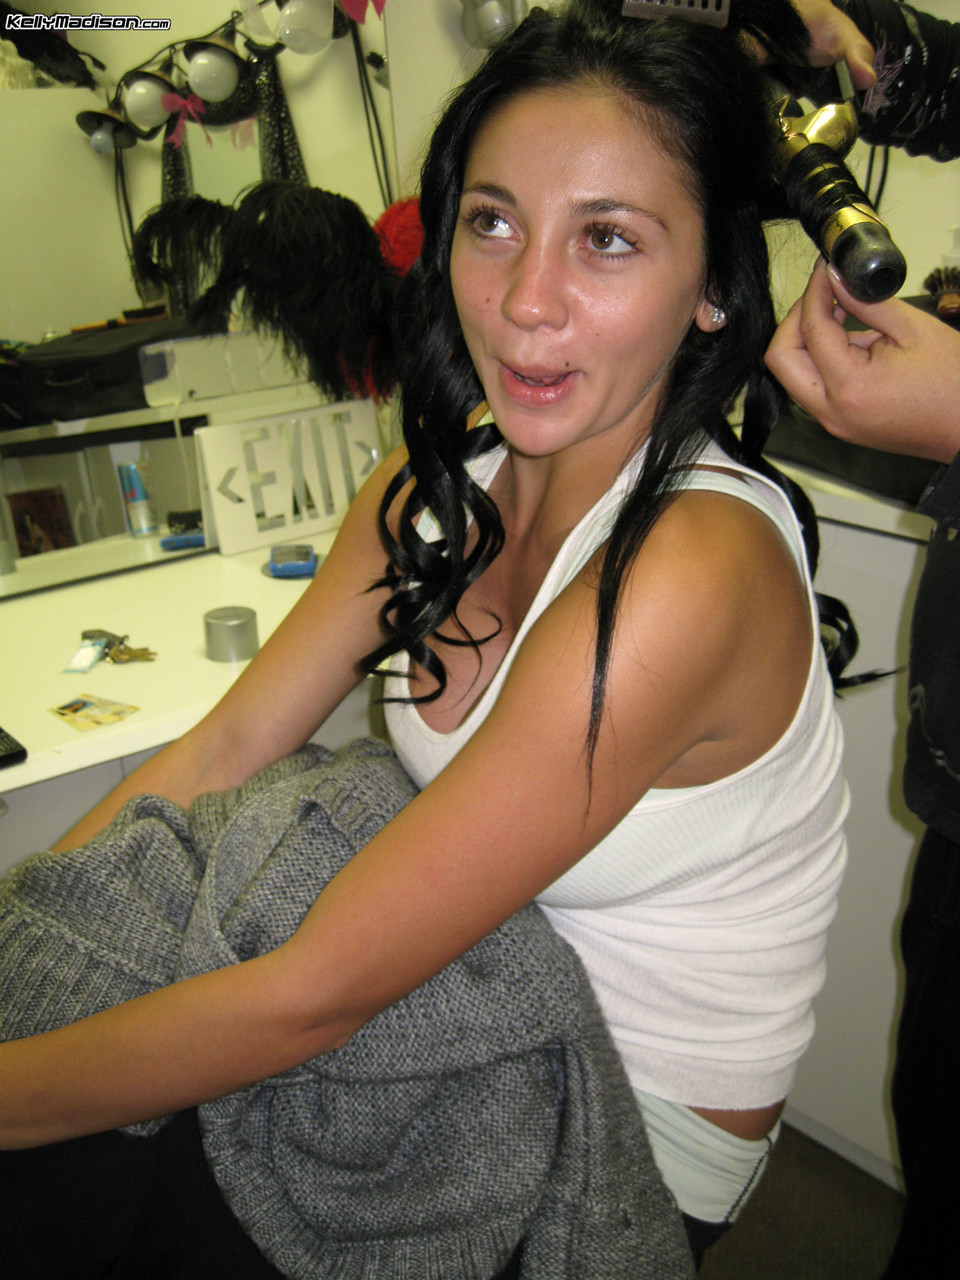 Raven haired pornstar Audrey Bitoni bares fake tits on her wedding day 포르노 사진 #426747587 | Porn Fidelity Pics, Audrey Bitoni, Ryan Madison, Wedding, 모바일 포르노